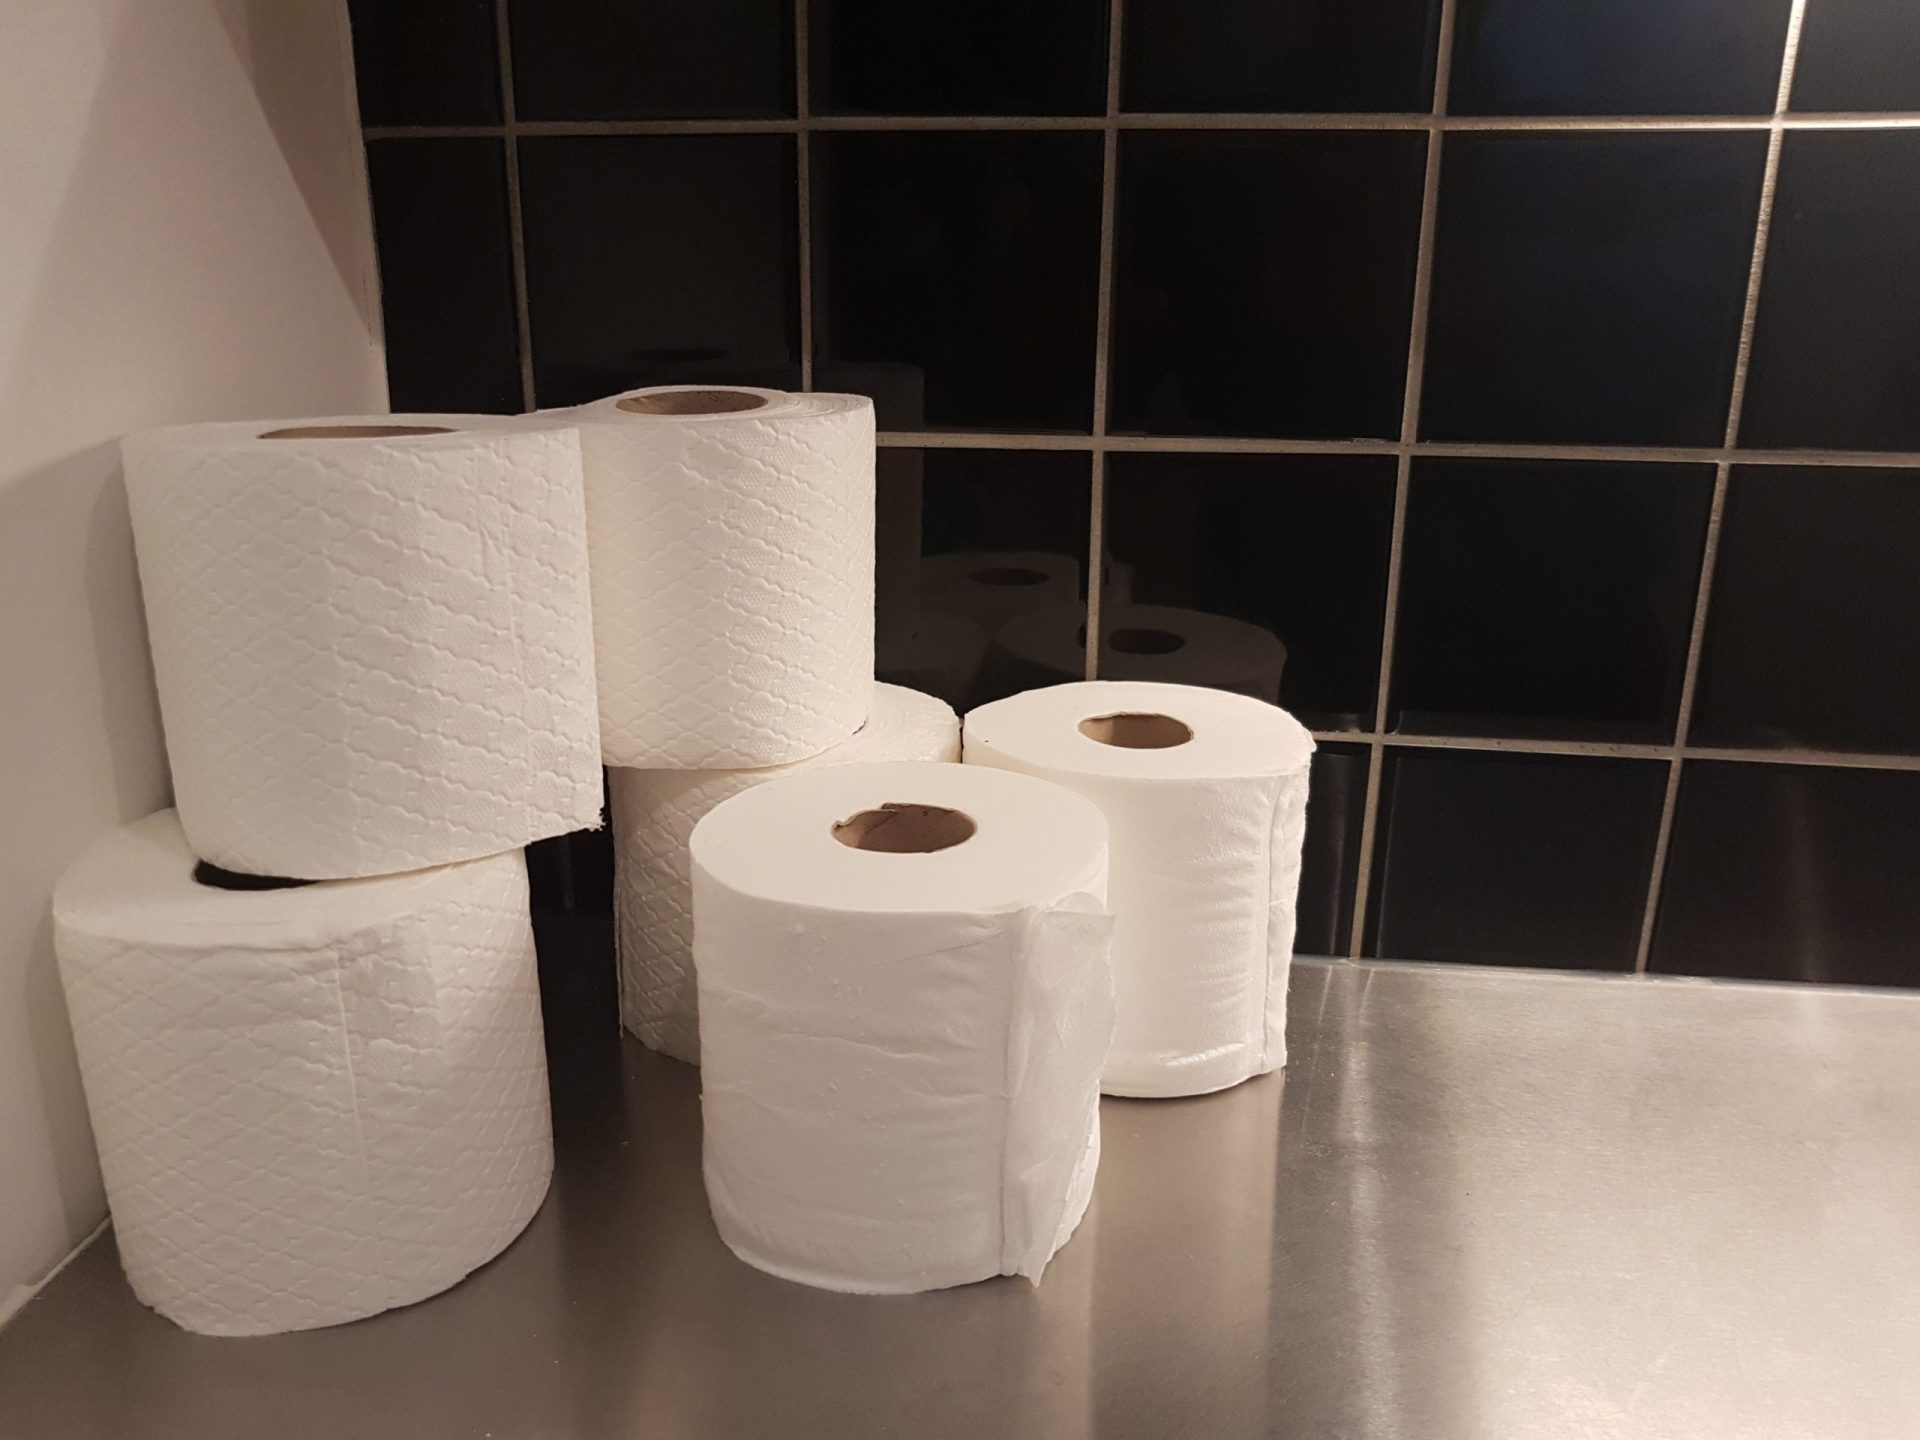 folding or scrunching toilet paper